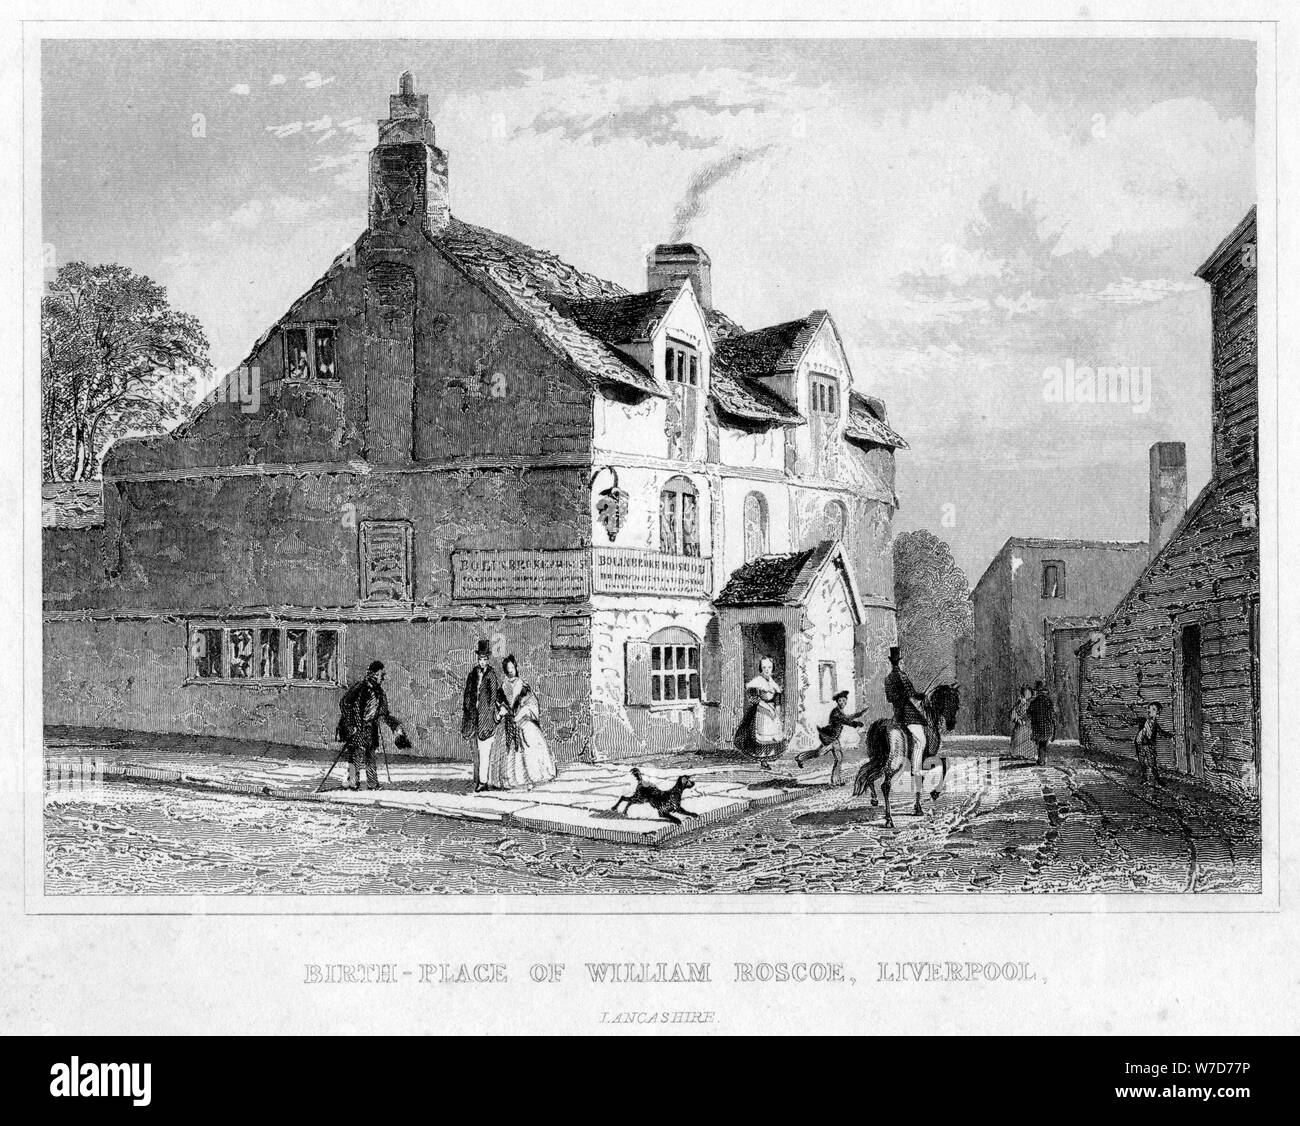 'Birth-Place of William Roscoe, Liverpool, Lancashire', 19th century. Artist: Unknown Stock Photo